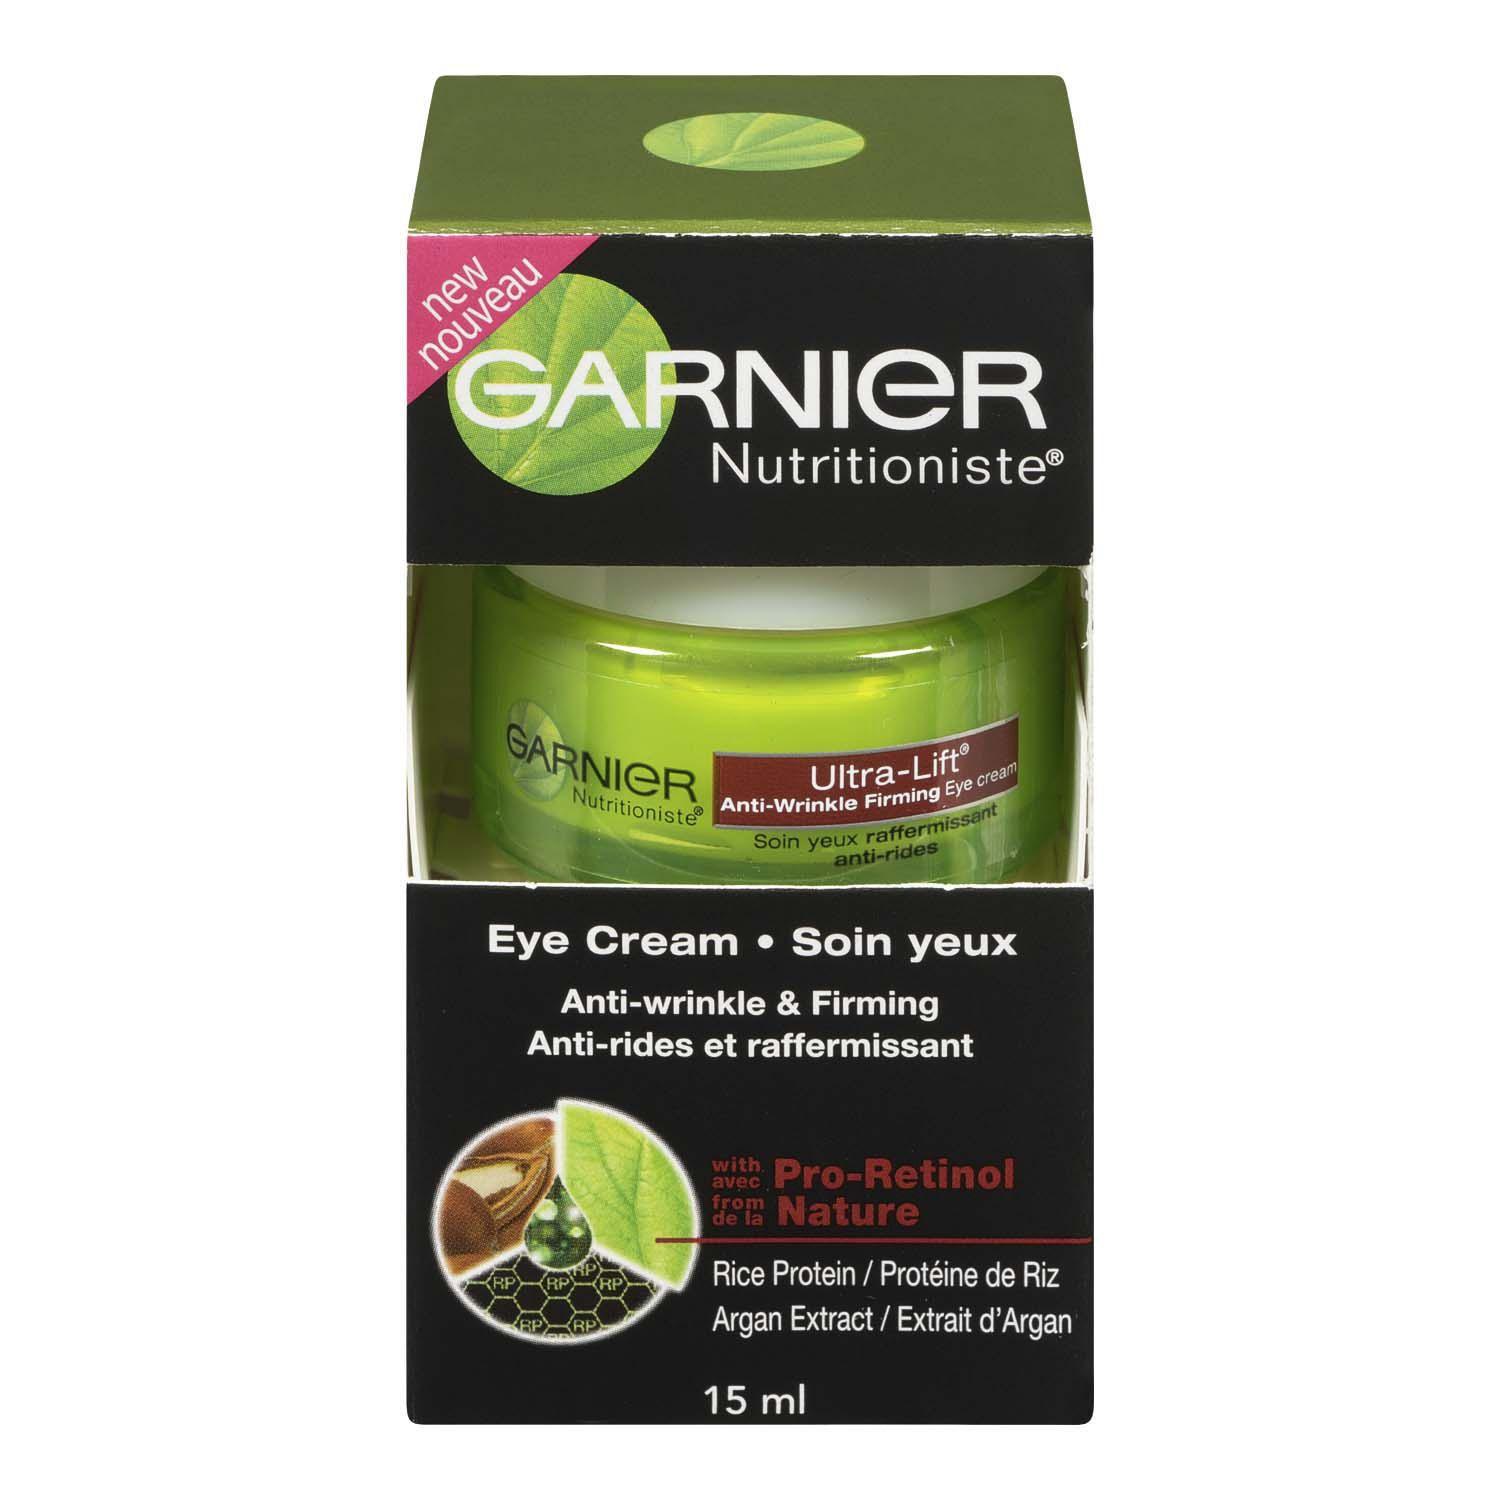 Nutritioniste Ultra-Lift Anti-Wrinkle Firming Eye Cream